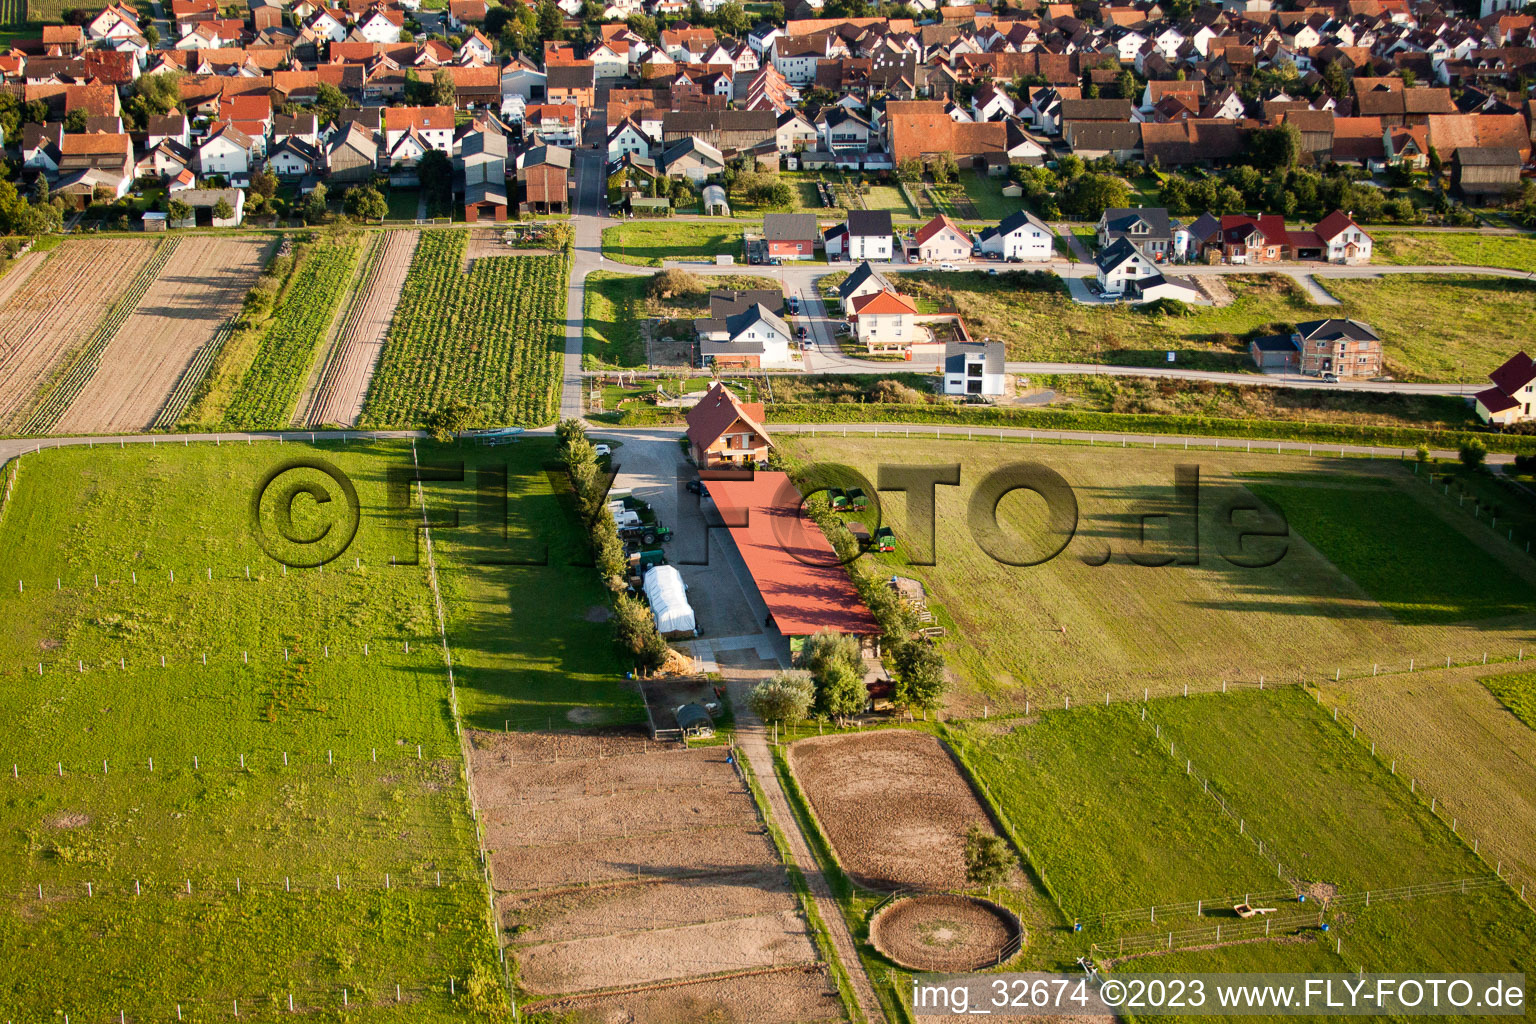 Bird's eye view of Emigrant farms in Hatzenbühl in the state Rhineland-Palatinate, Germany